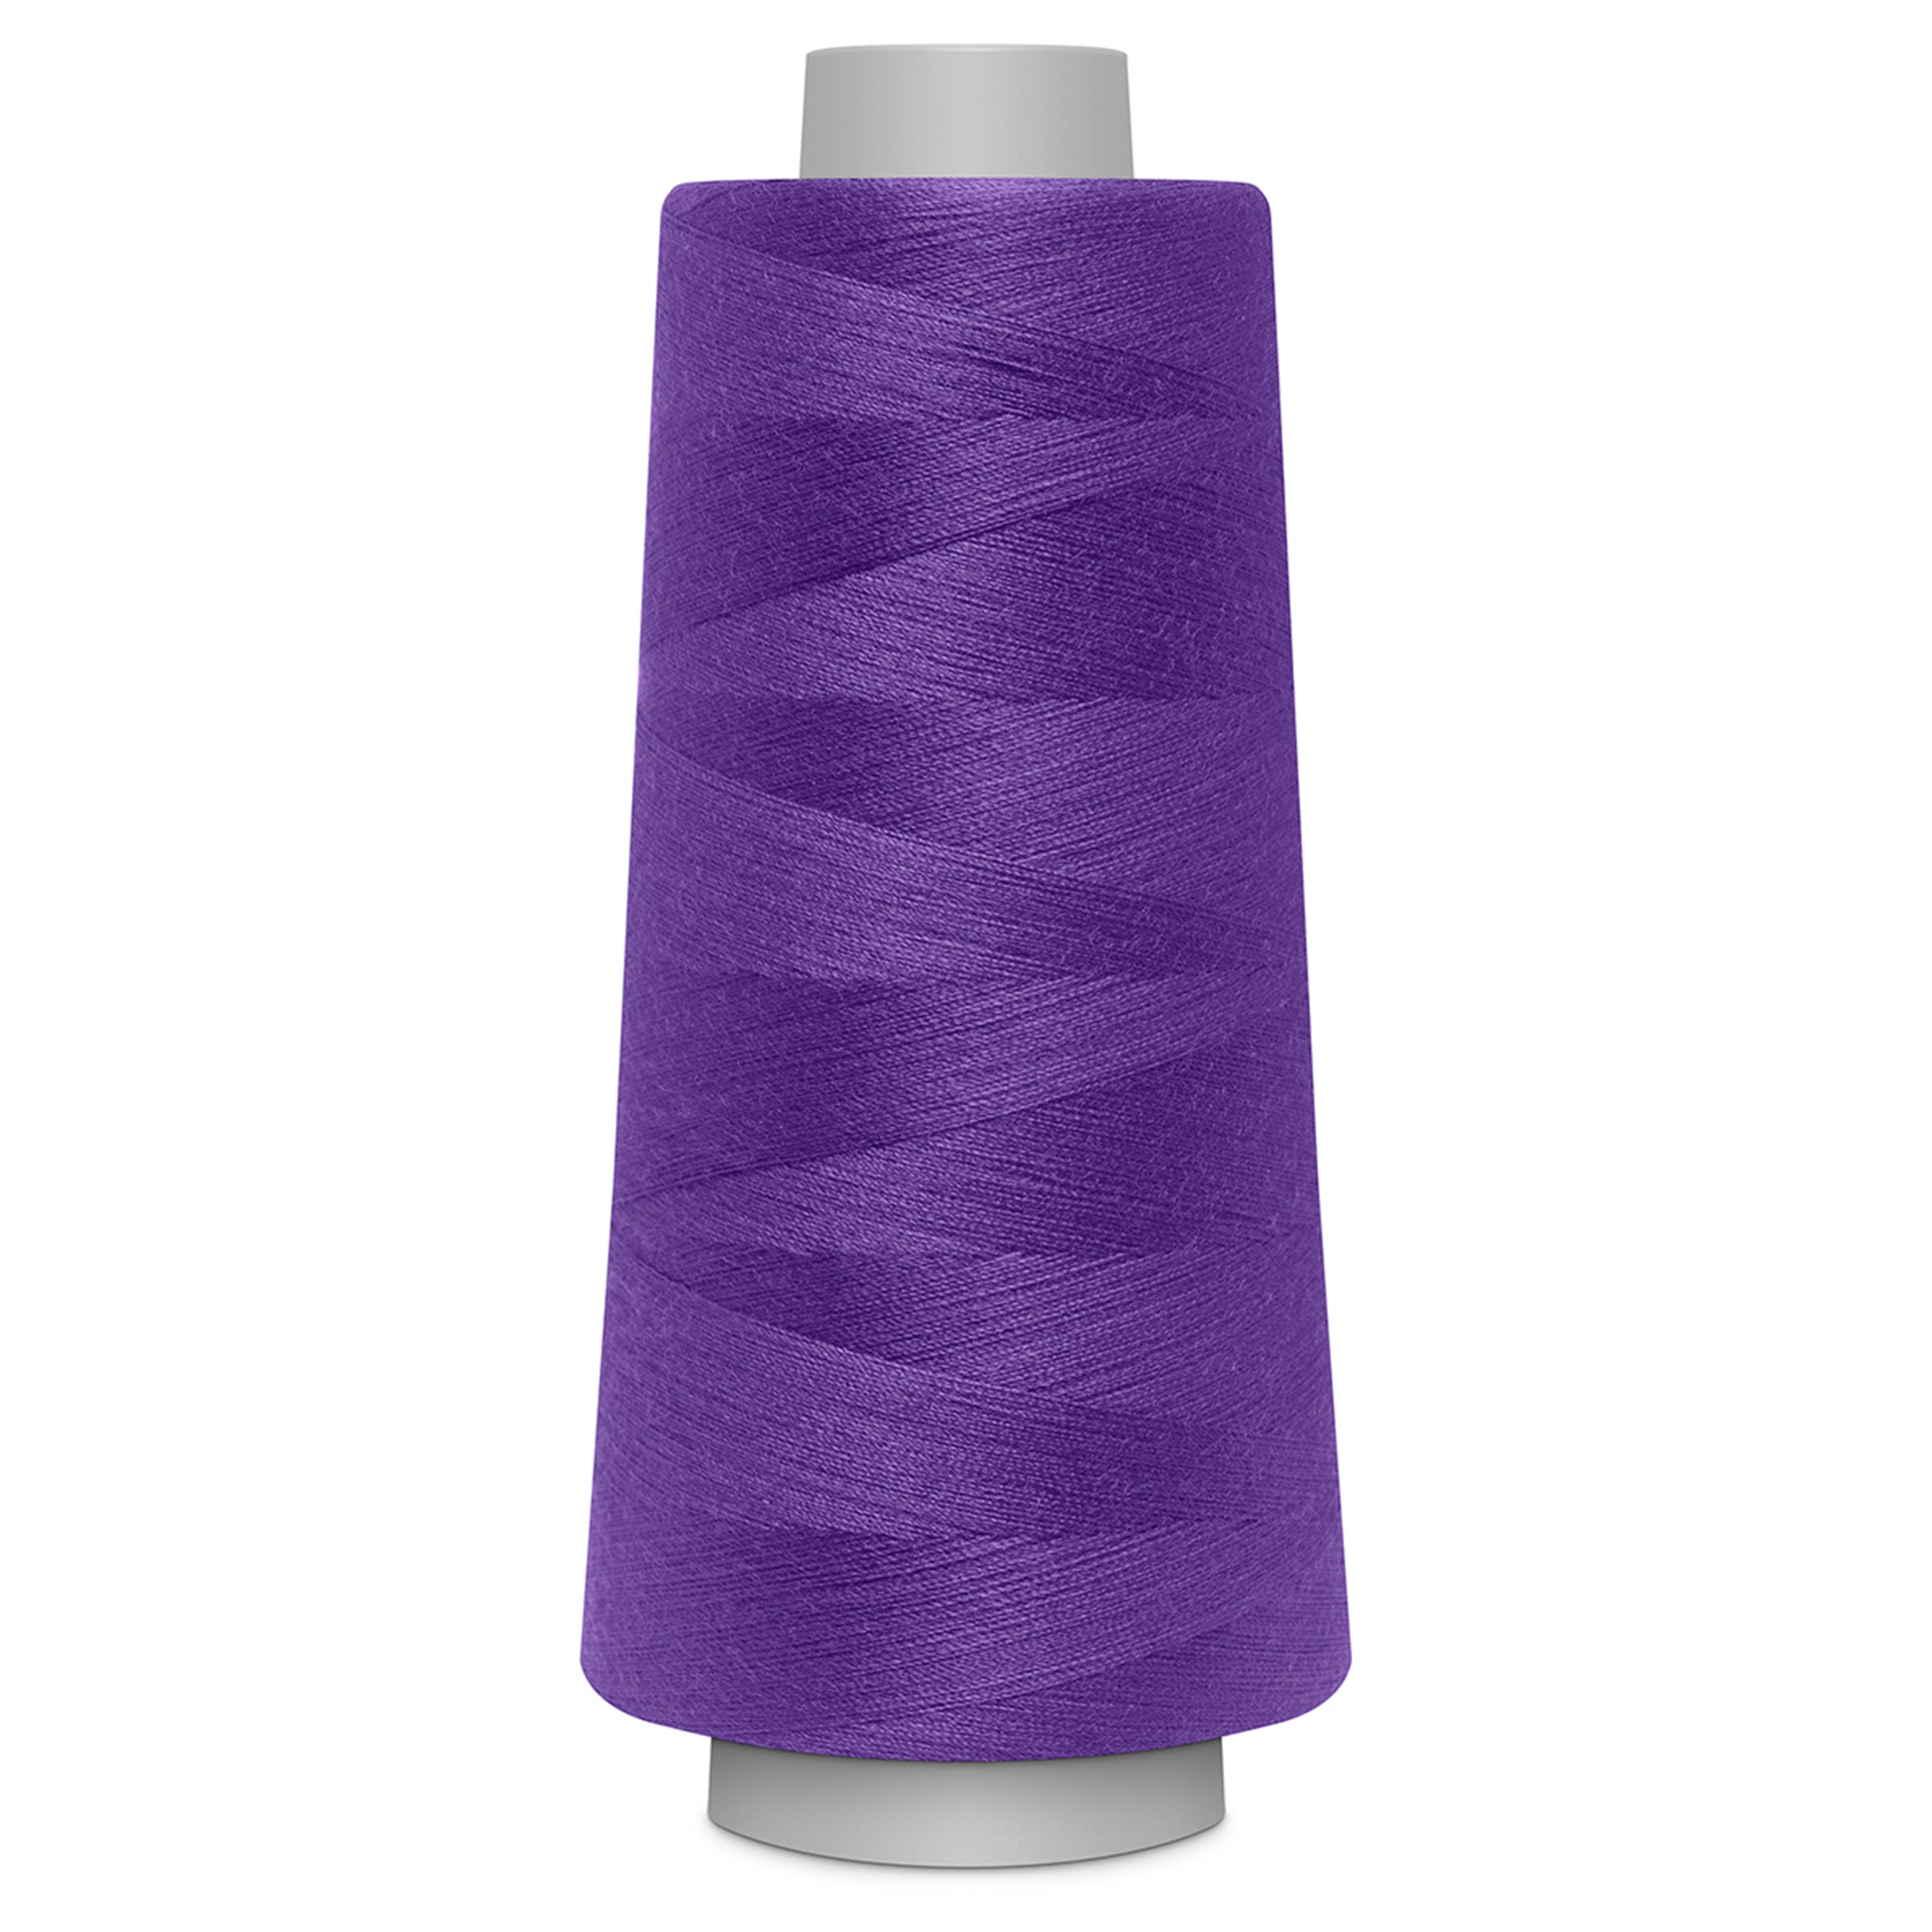 Gutermann TOLDI-LOCK Overlock Thread 2500m | Purple from Jaycotts Sewing Supplies